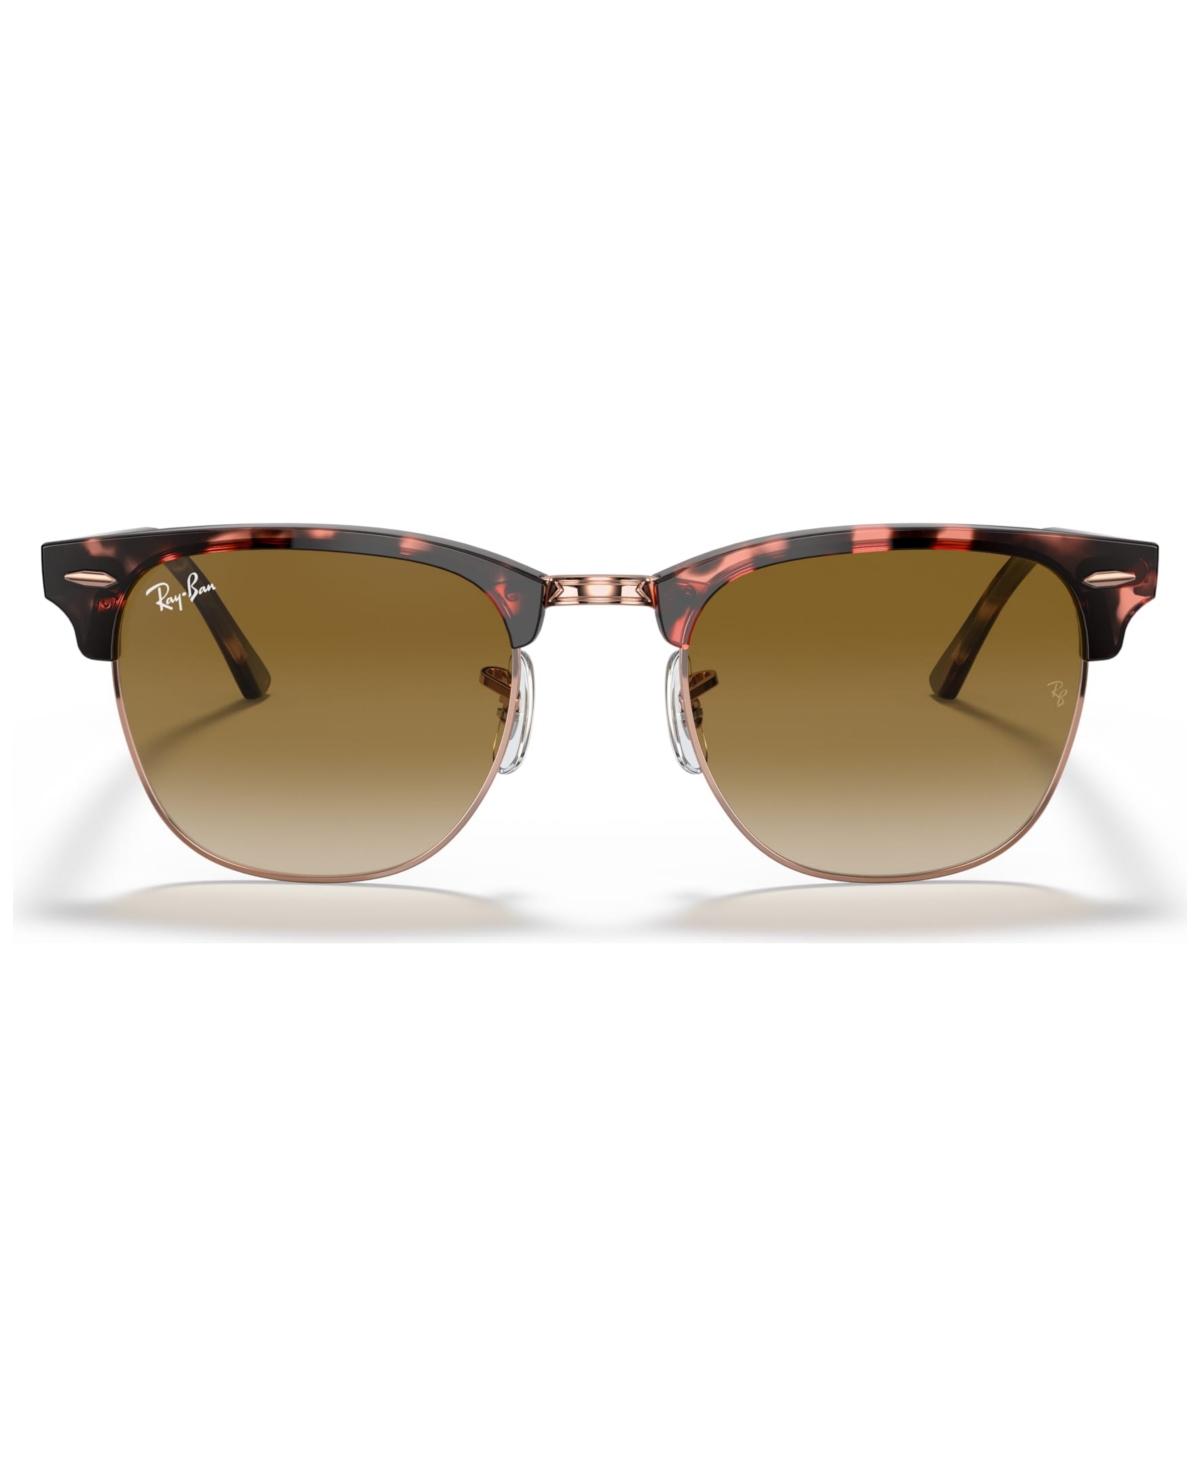 Ray Ban Clubmaster Fleck Sunglasses Tortoise Frame Brown Lenses 49-21